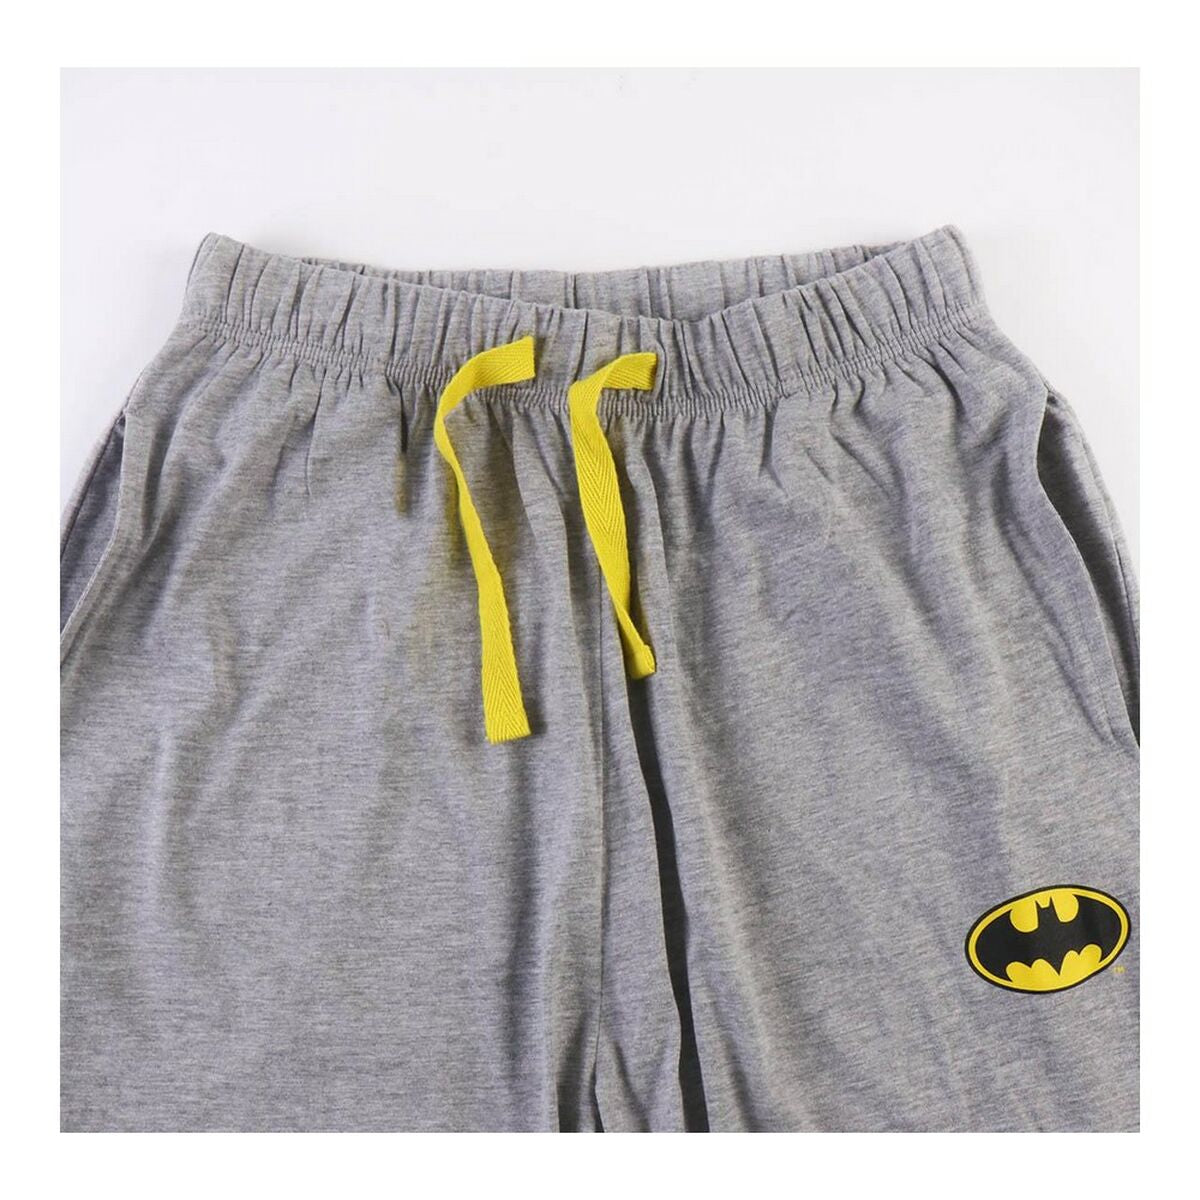 Schlafanzug Batman Herren Schwarz